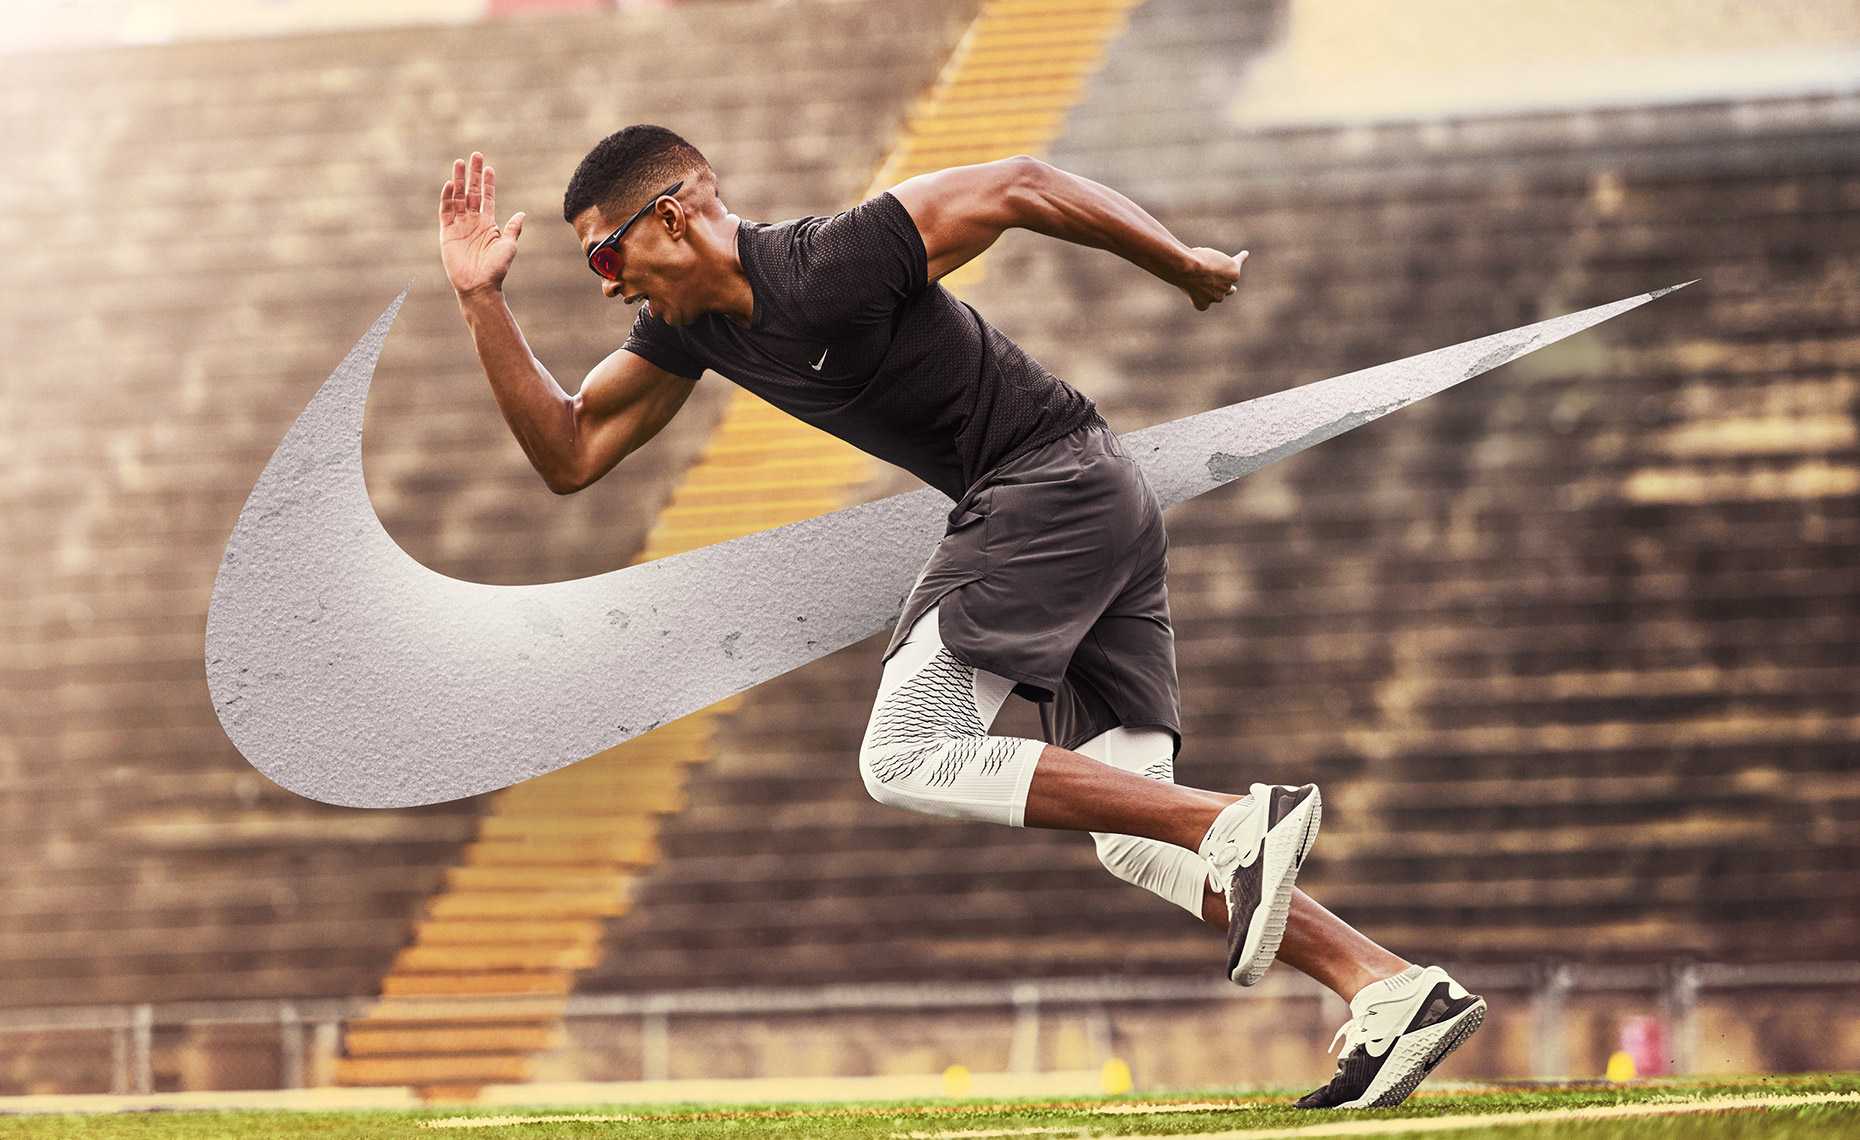 Nike: реклама, которая вдохновляет